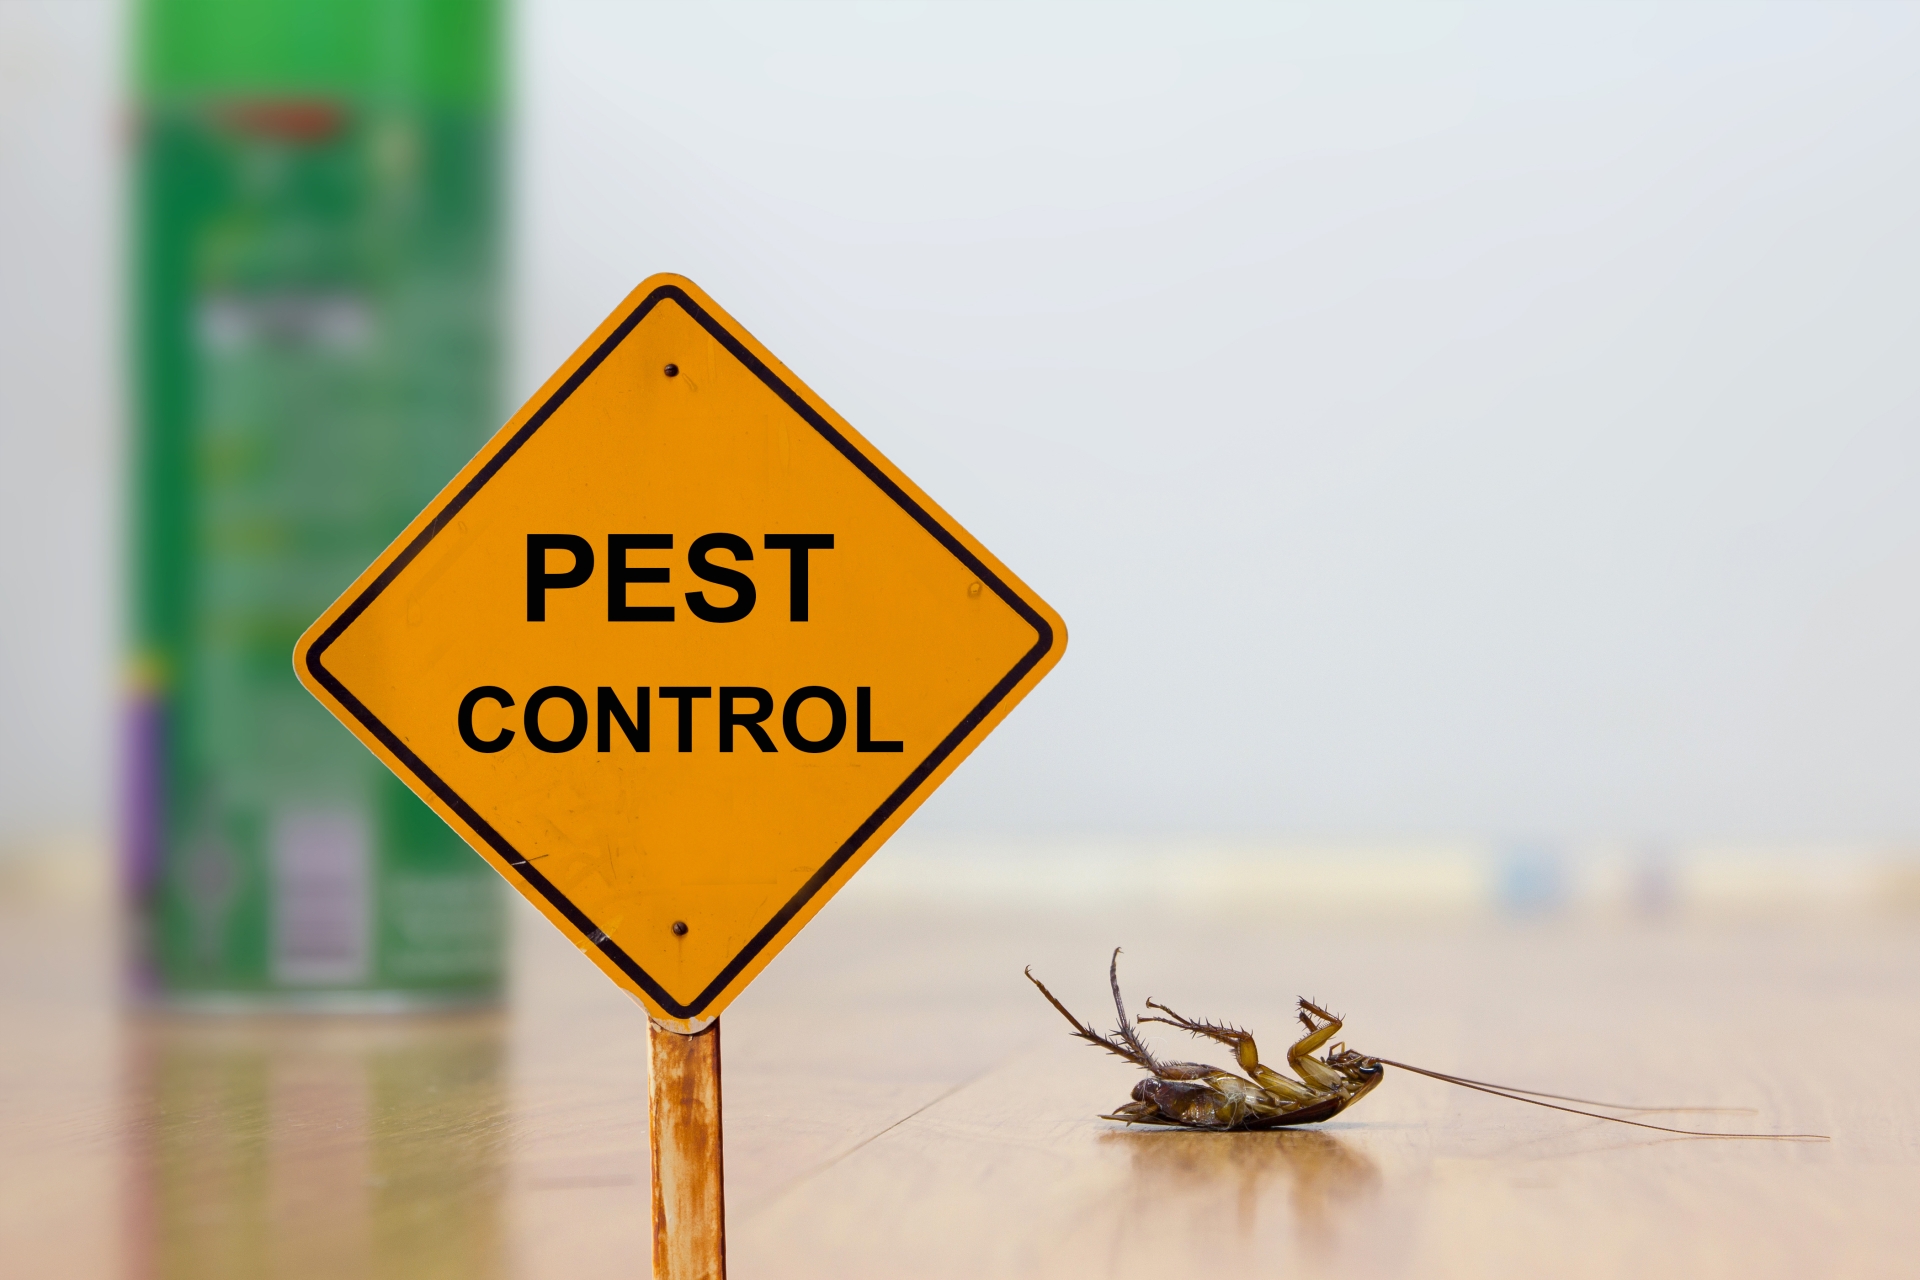 24 Hour Pest Control, Pest Control in Gravesend, Northfleet, DA11. Call Now 020 8166 9746